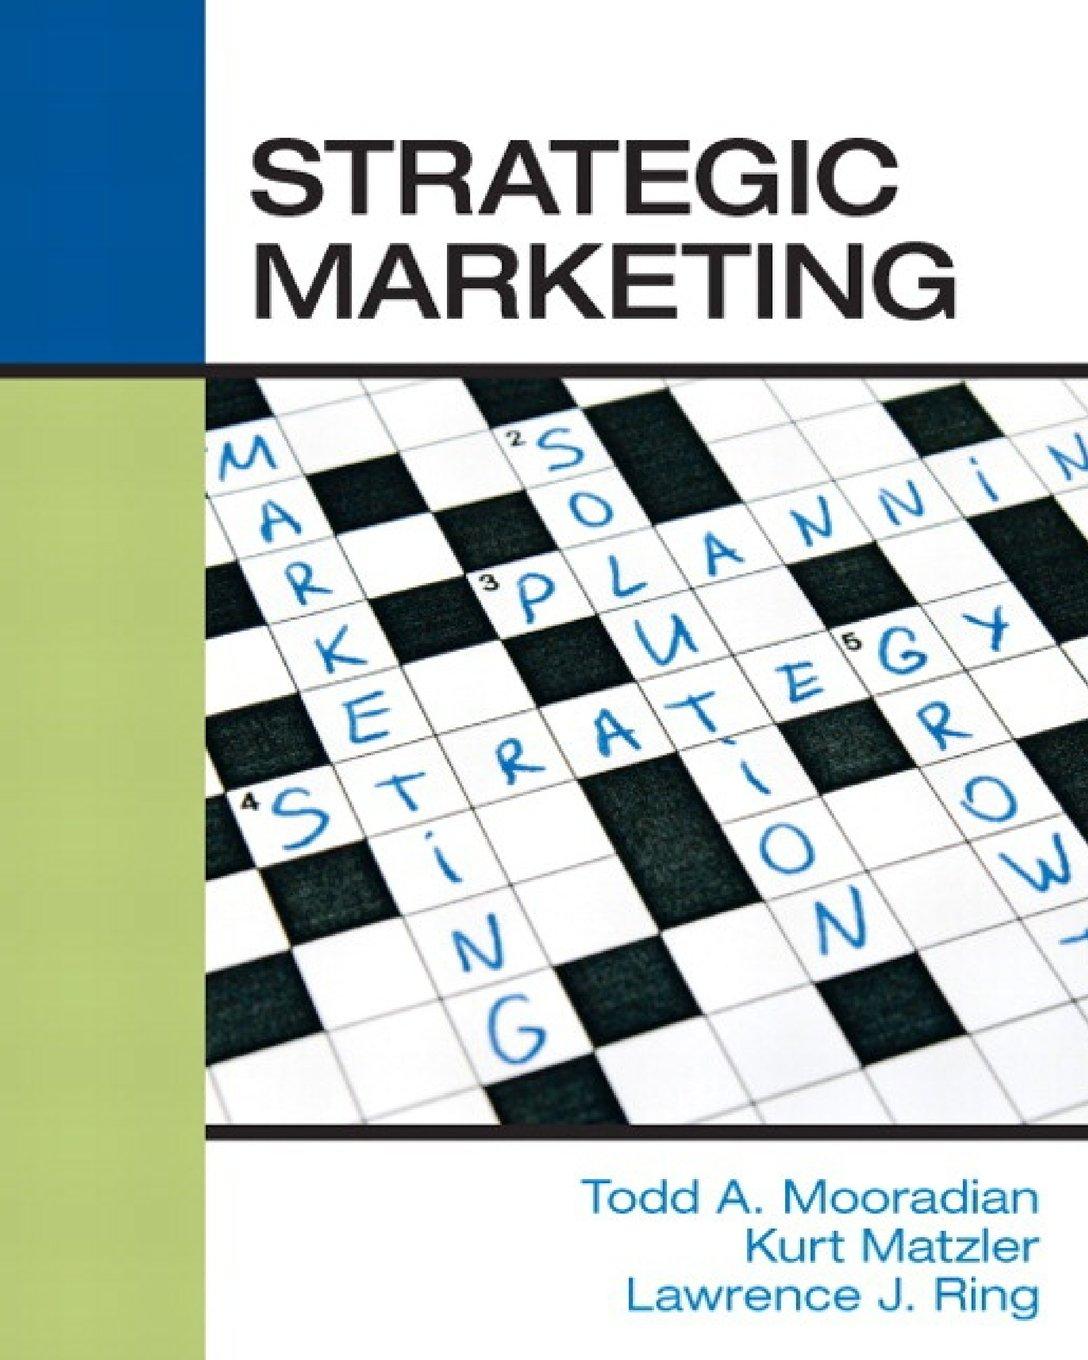 strategic marketing 1st edition todd a mooradian, kurt matzler, lawrence j ring 099054270x, 9780990542704